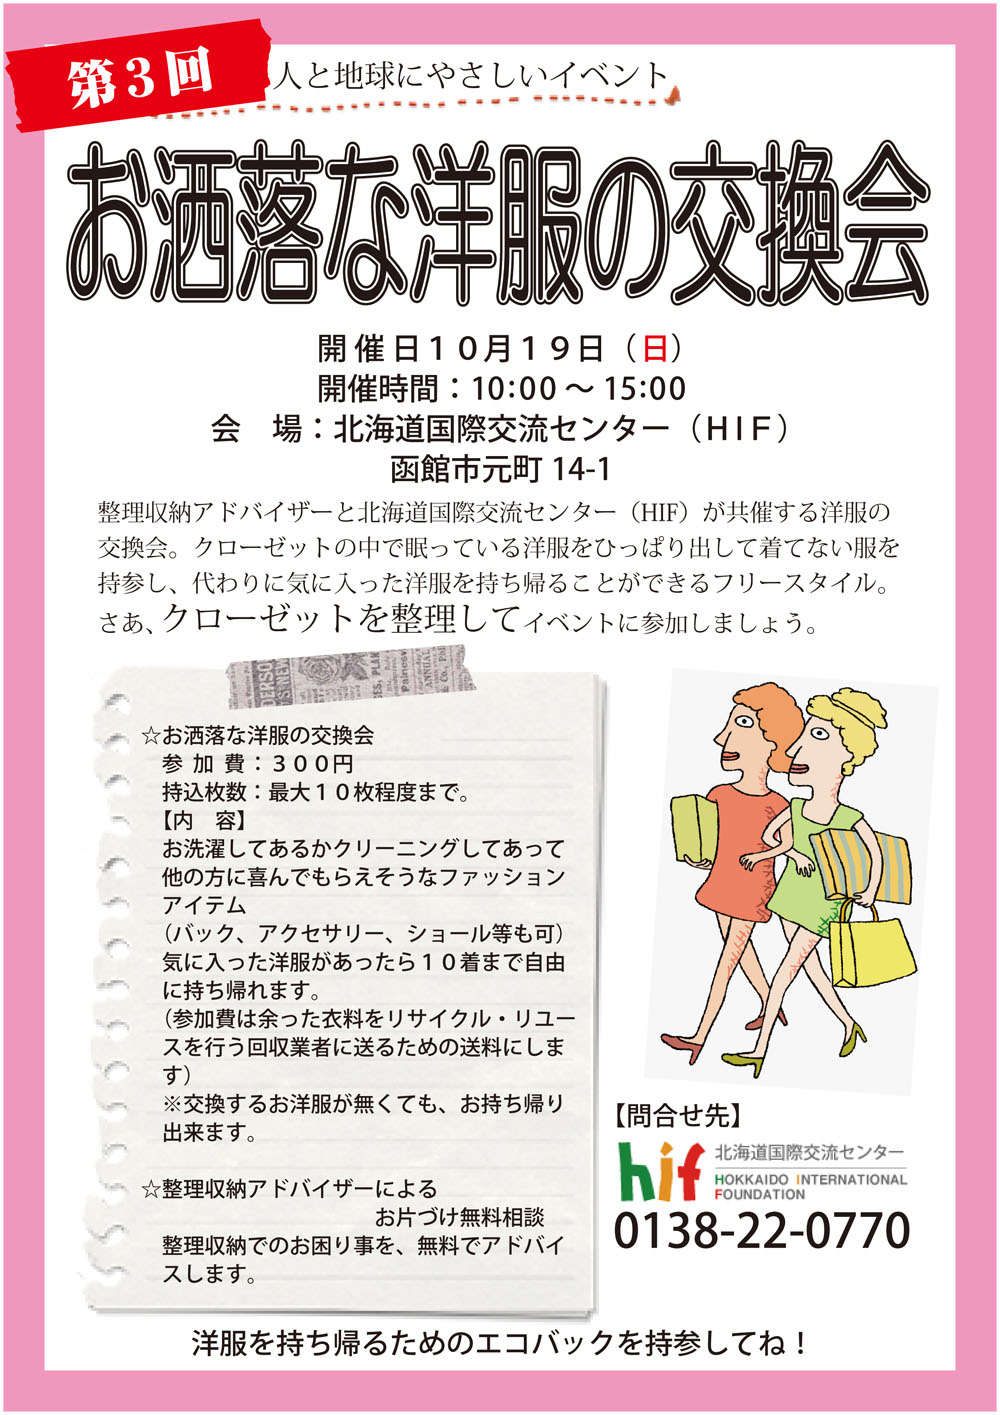 http://www.hif.or.jp/2014/10/07/HIF20141019_A4.jpg